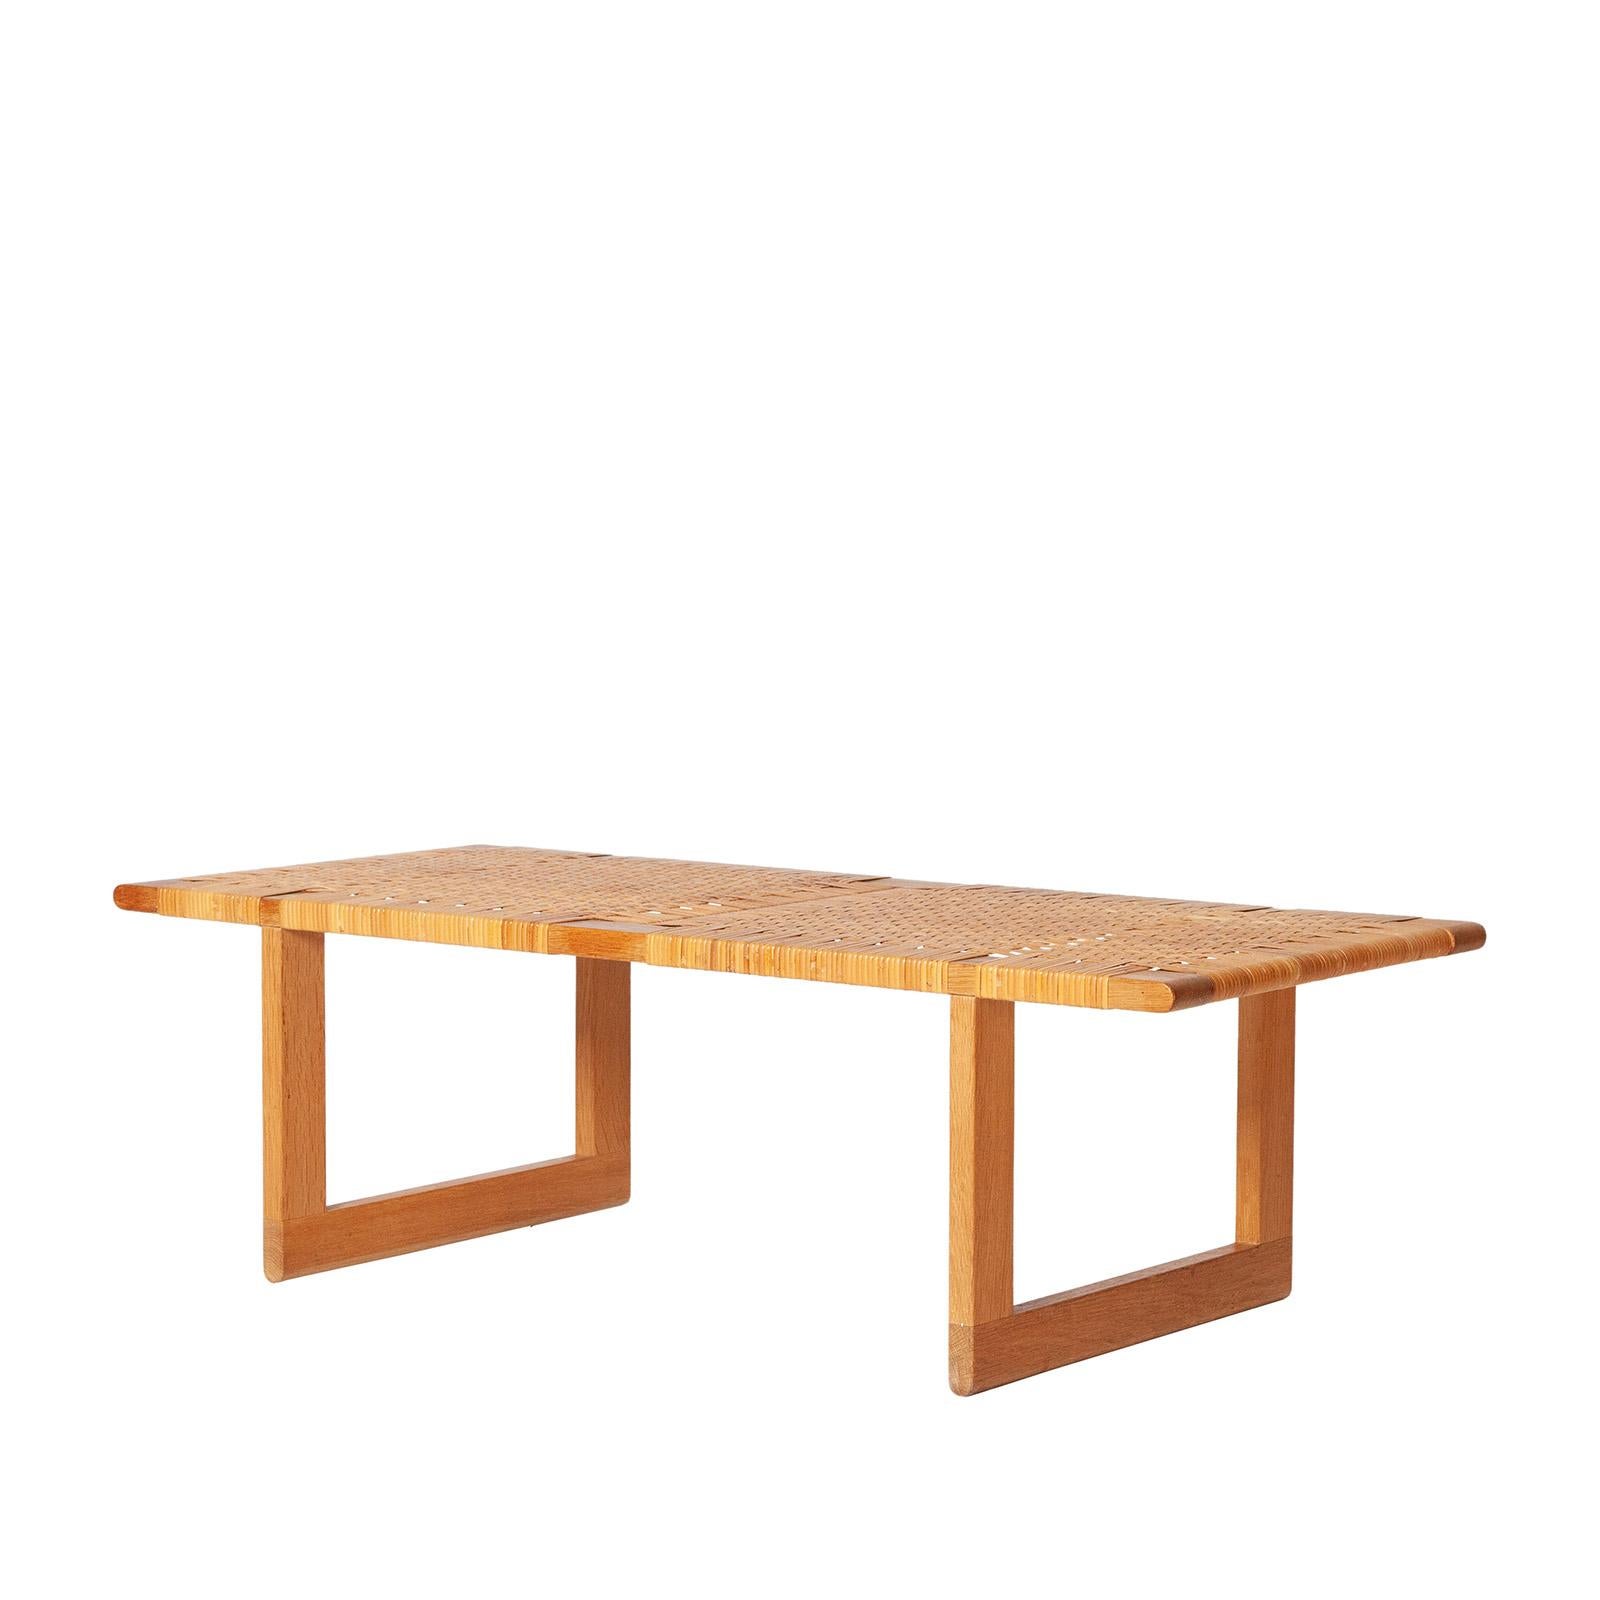 Scandinavian Modern Danish Table Bench in Oak and Cane by Børge Mogensen For Sale